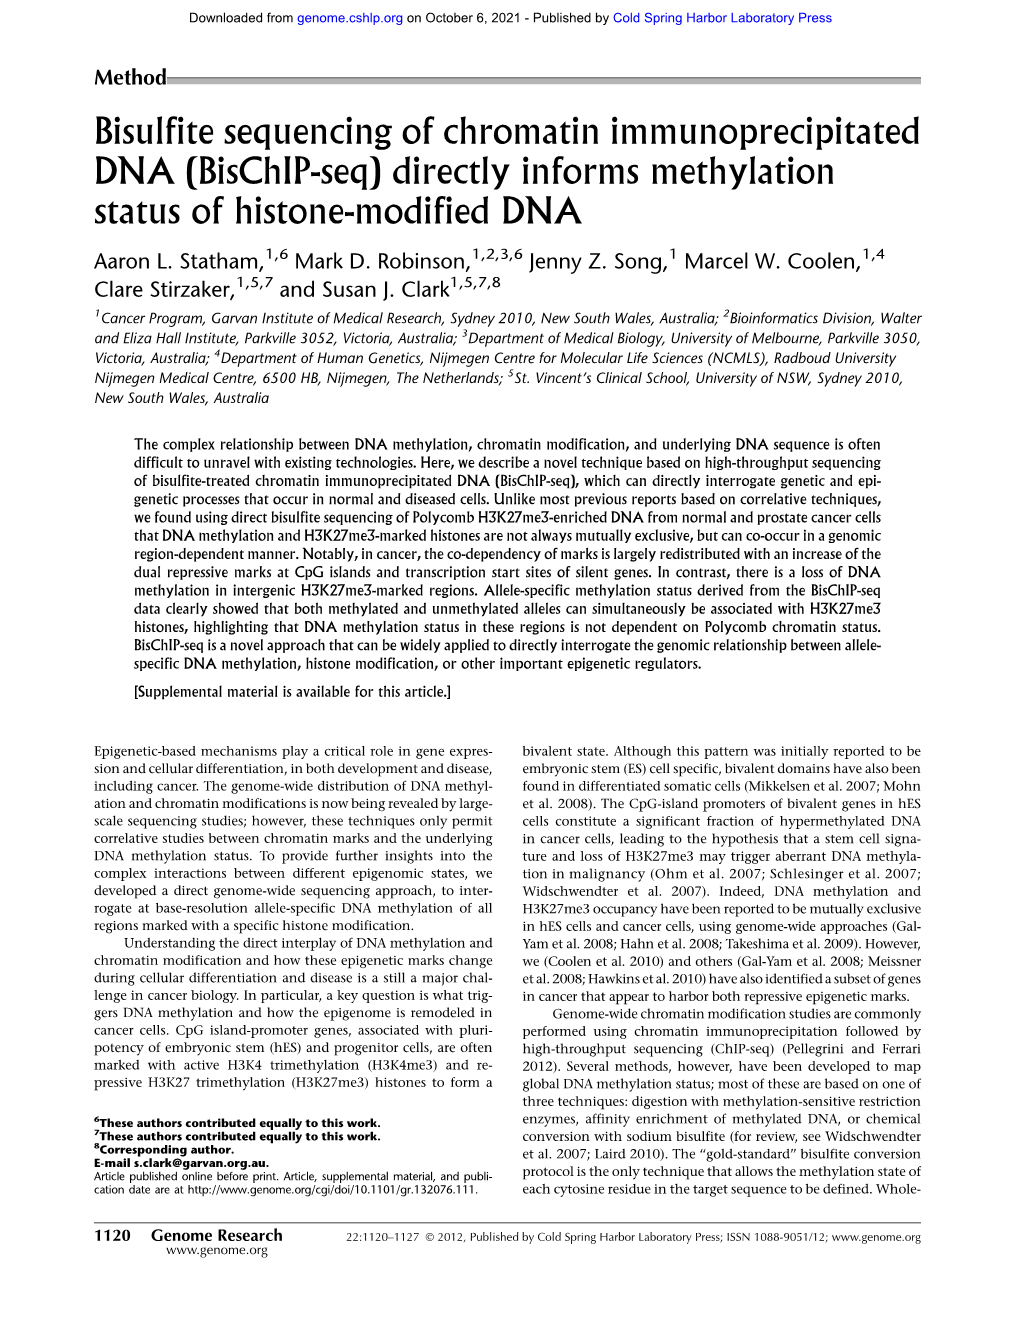 Bisulfite Sequencing of Chromatin Immunoprecipitated DNA (Bischip-Seq) Directly Informs Methylation Status of Histone-Modified DNA